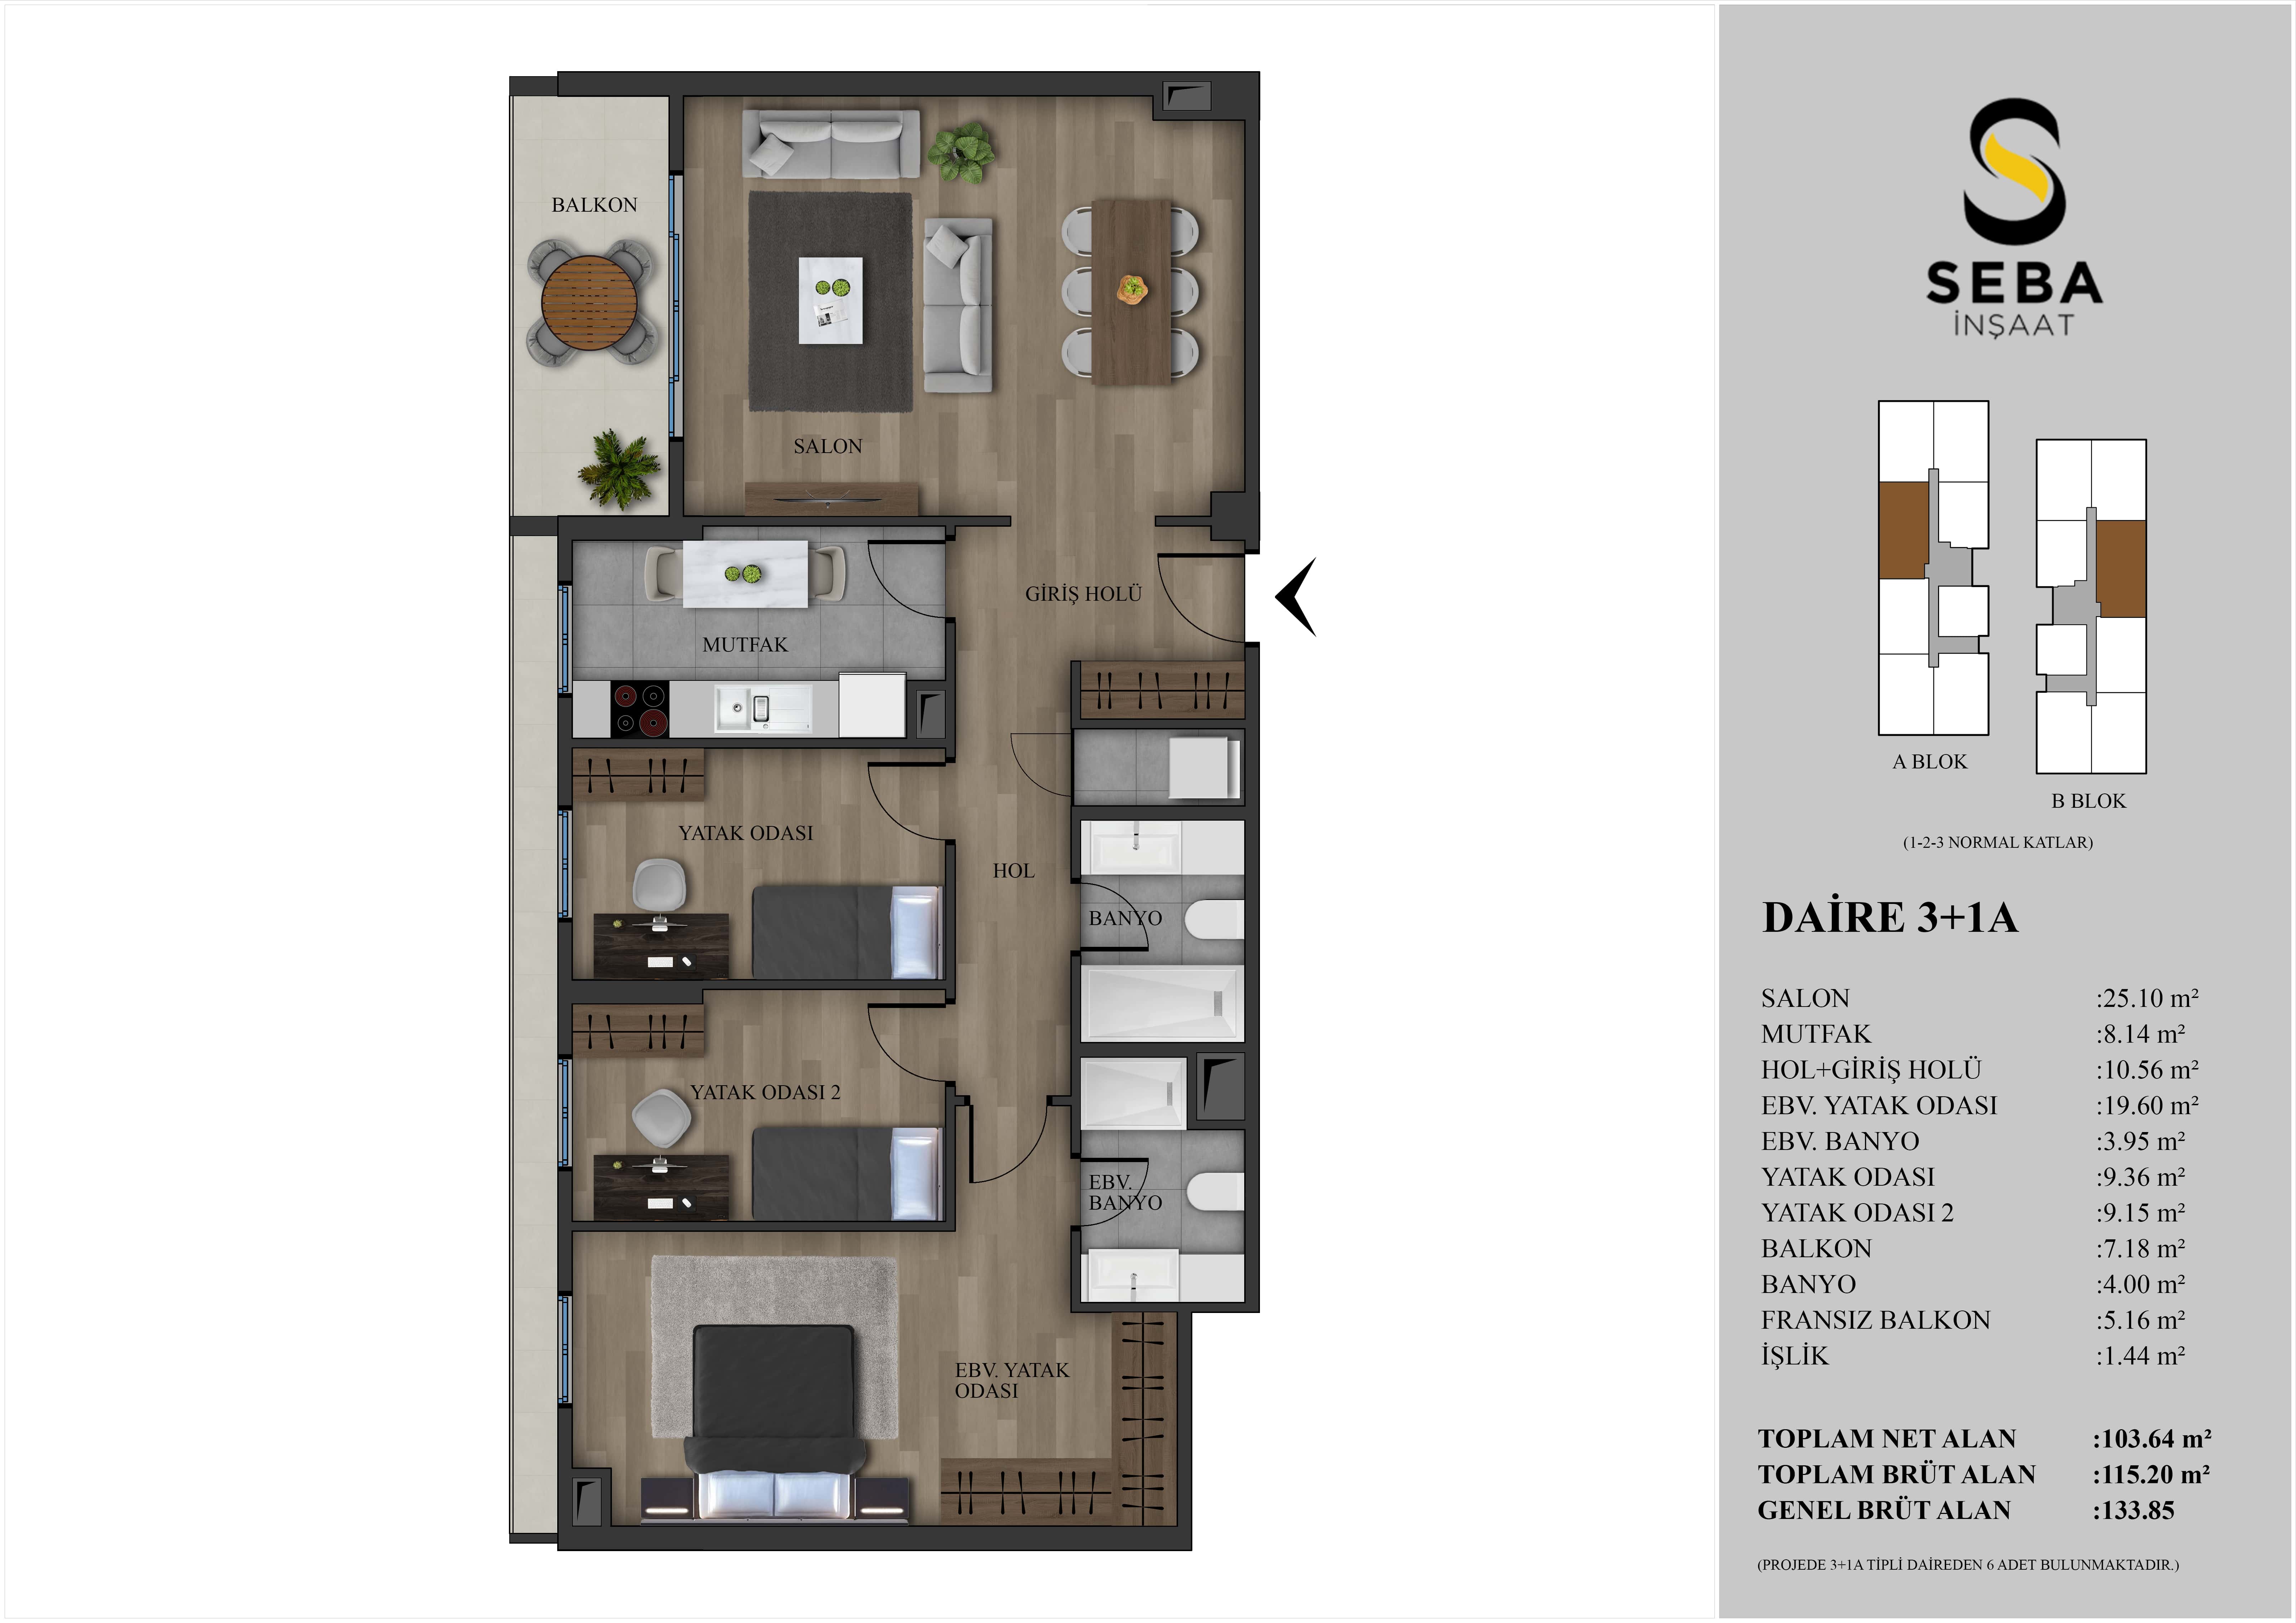 2+1 Duplex Type Flat in Seba Nest | Kagithane